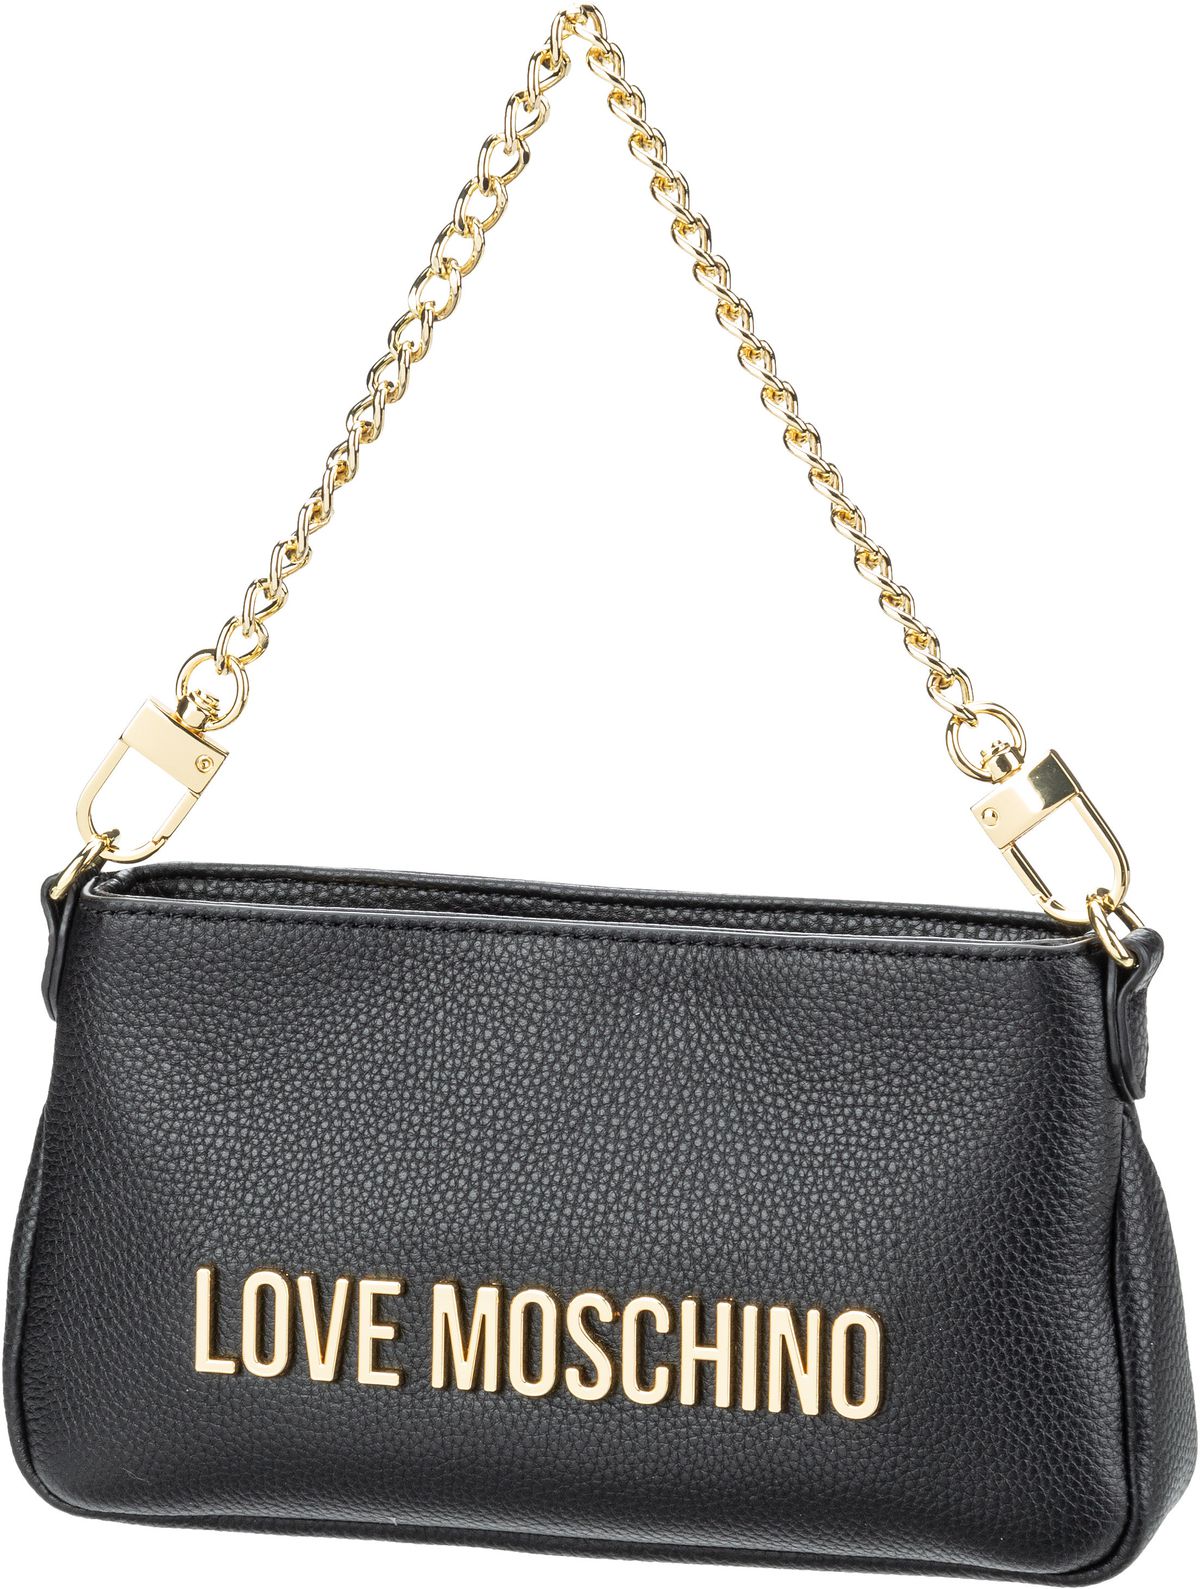 Love Moschino Lady Killer Crossbody Bag 4327 - Black